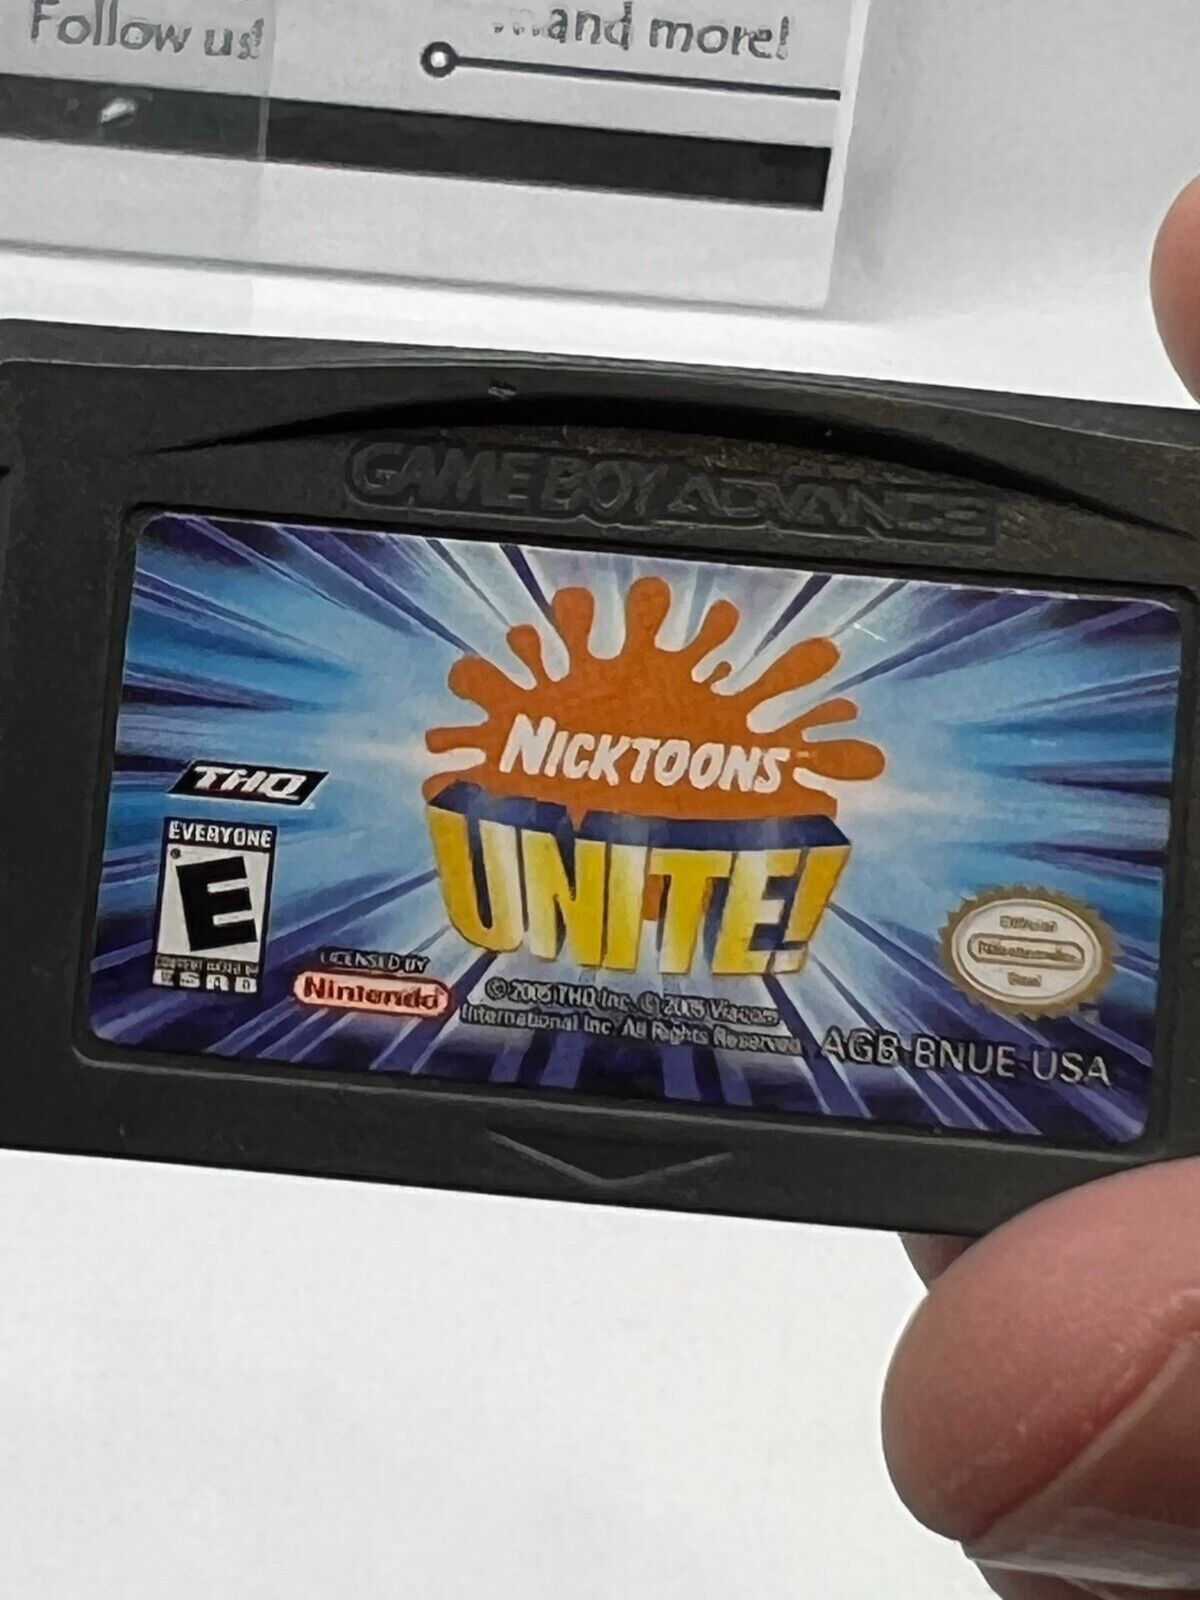 Nicktoons Unite (Nintendo Game Boy Advance, 2005) - Tested